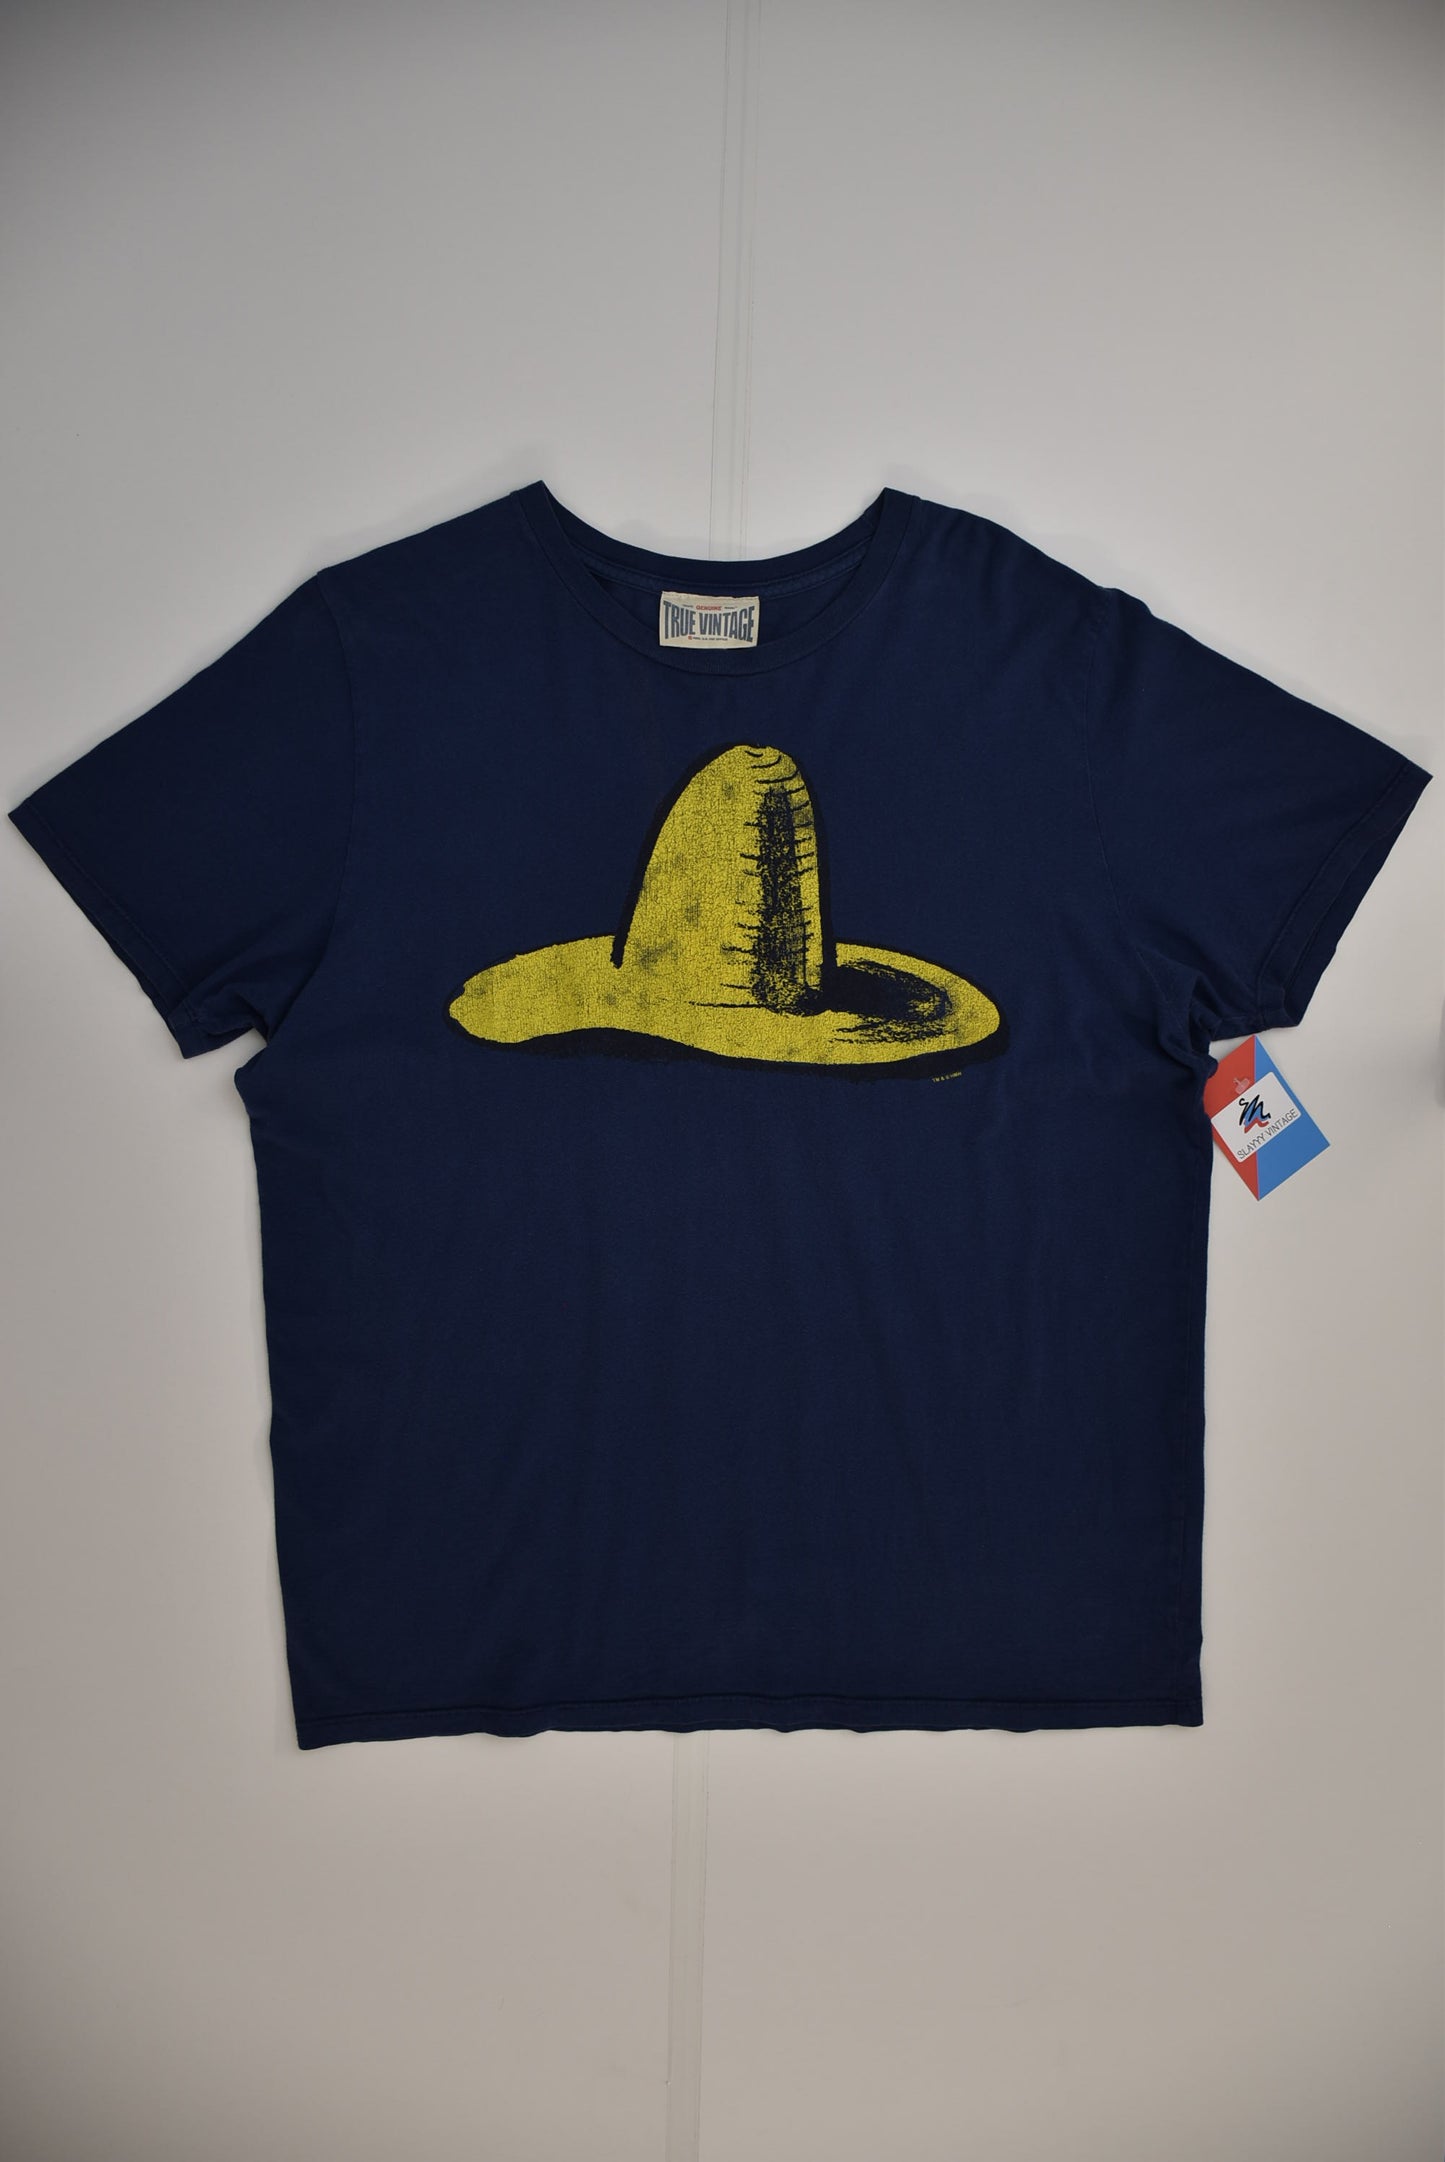 Curious George T-shirt (L)